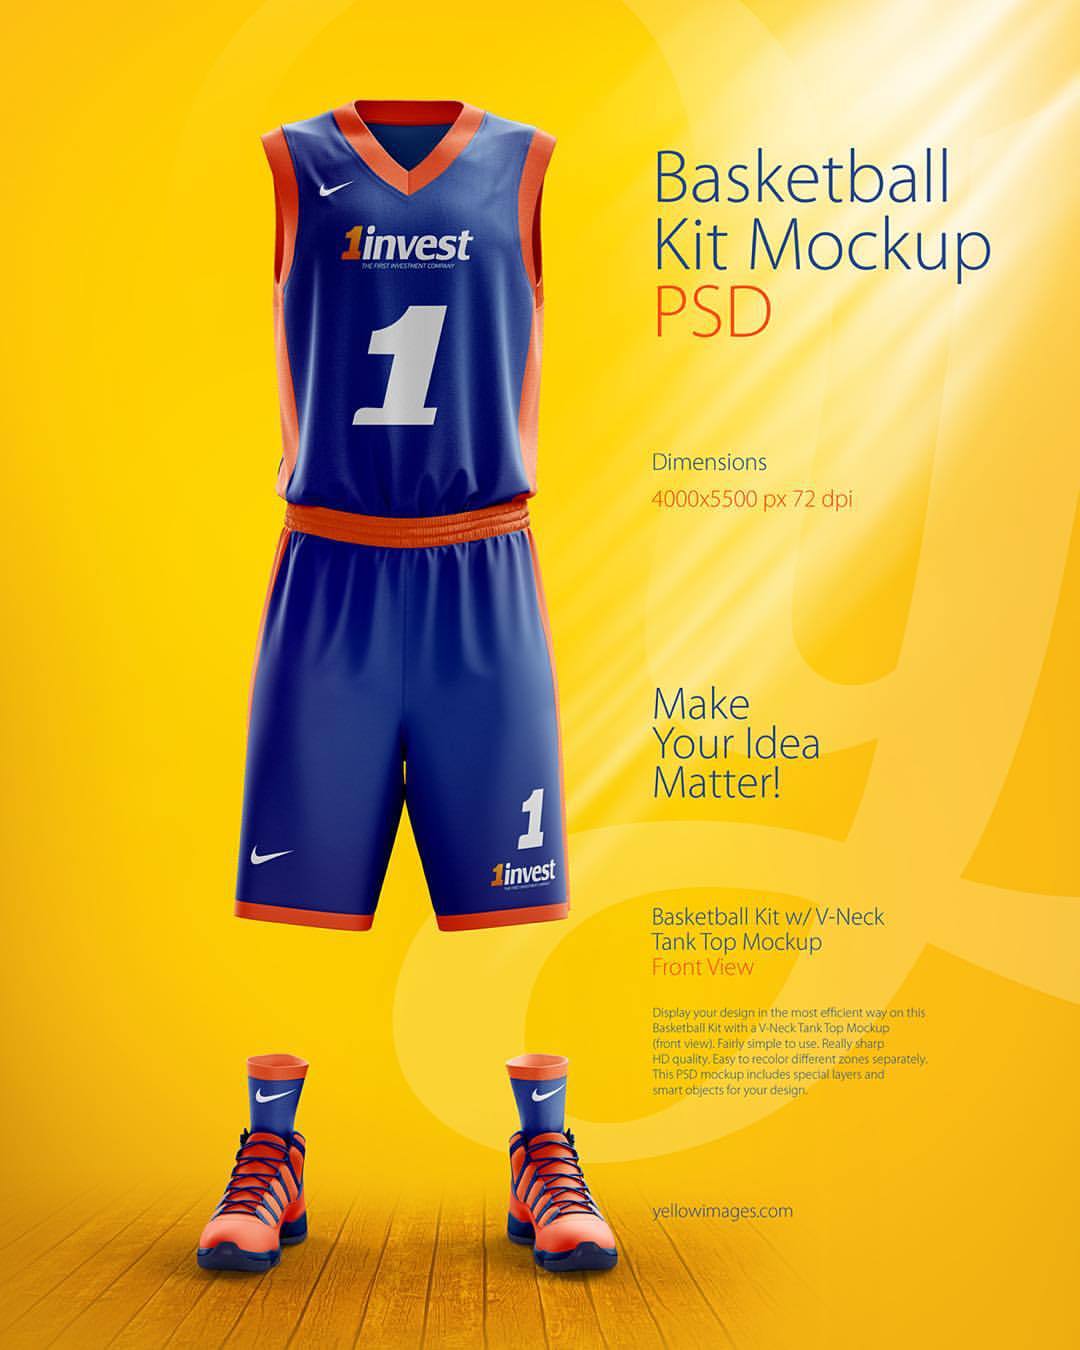 Download YELLOW IMAGES — #basketball #kit #PSD #mockup #marketplace...